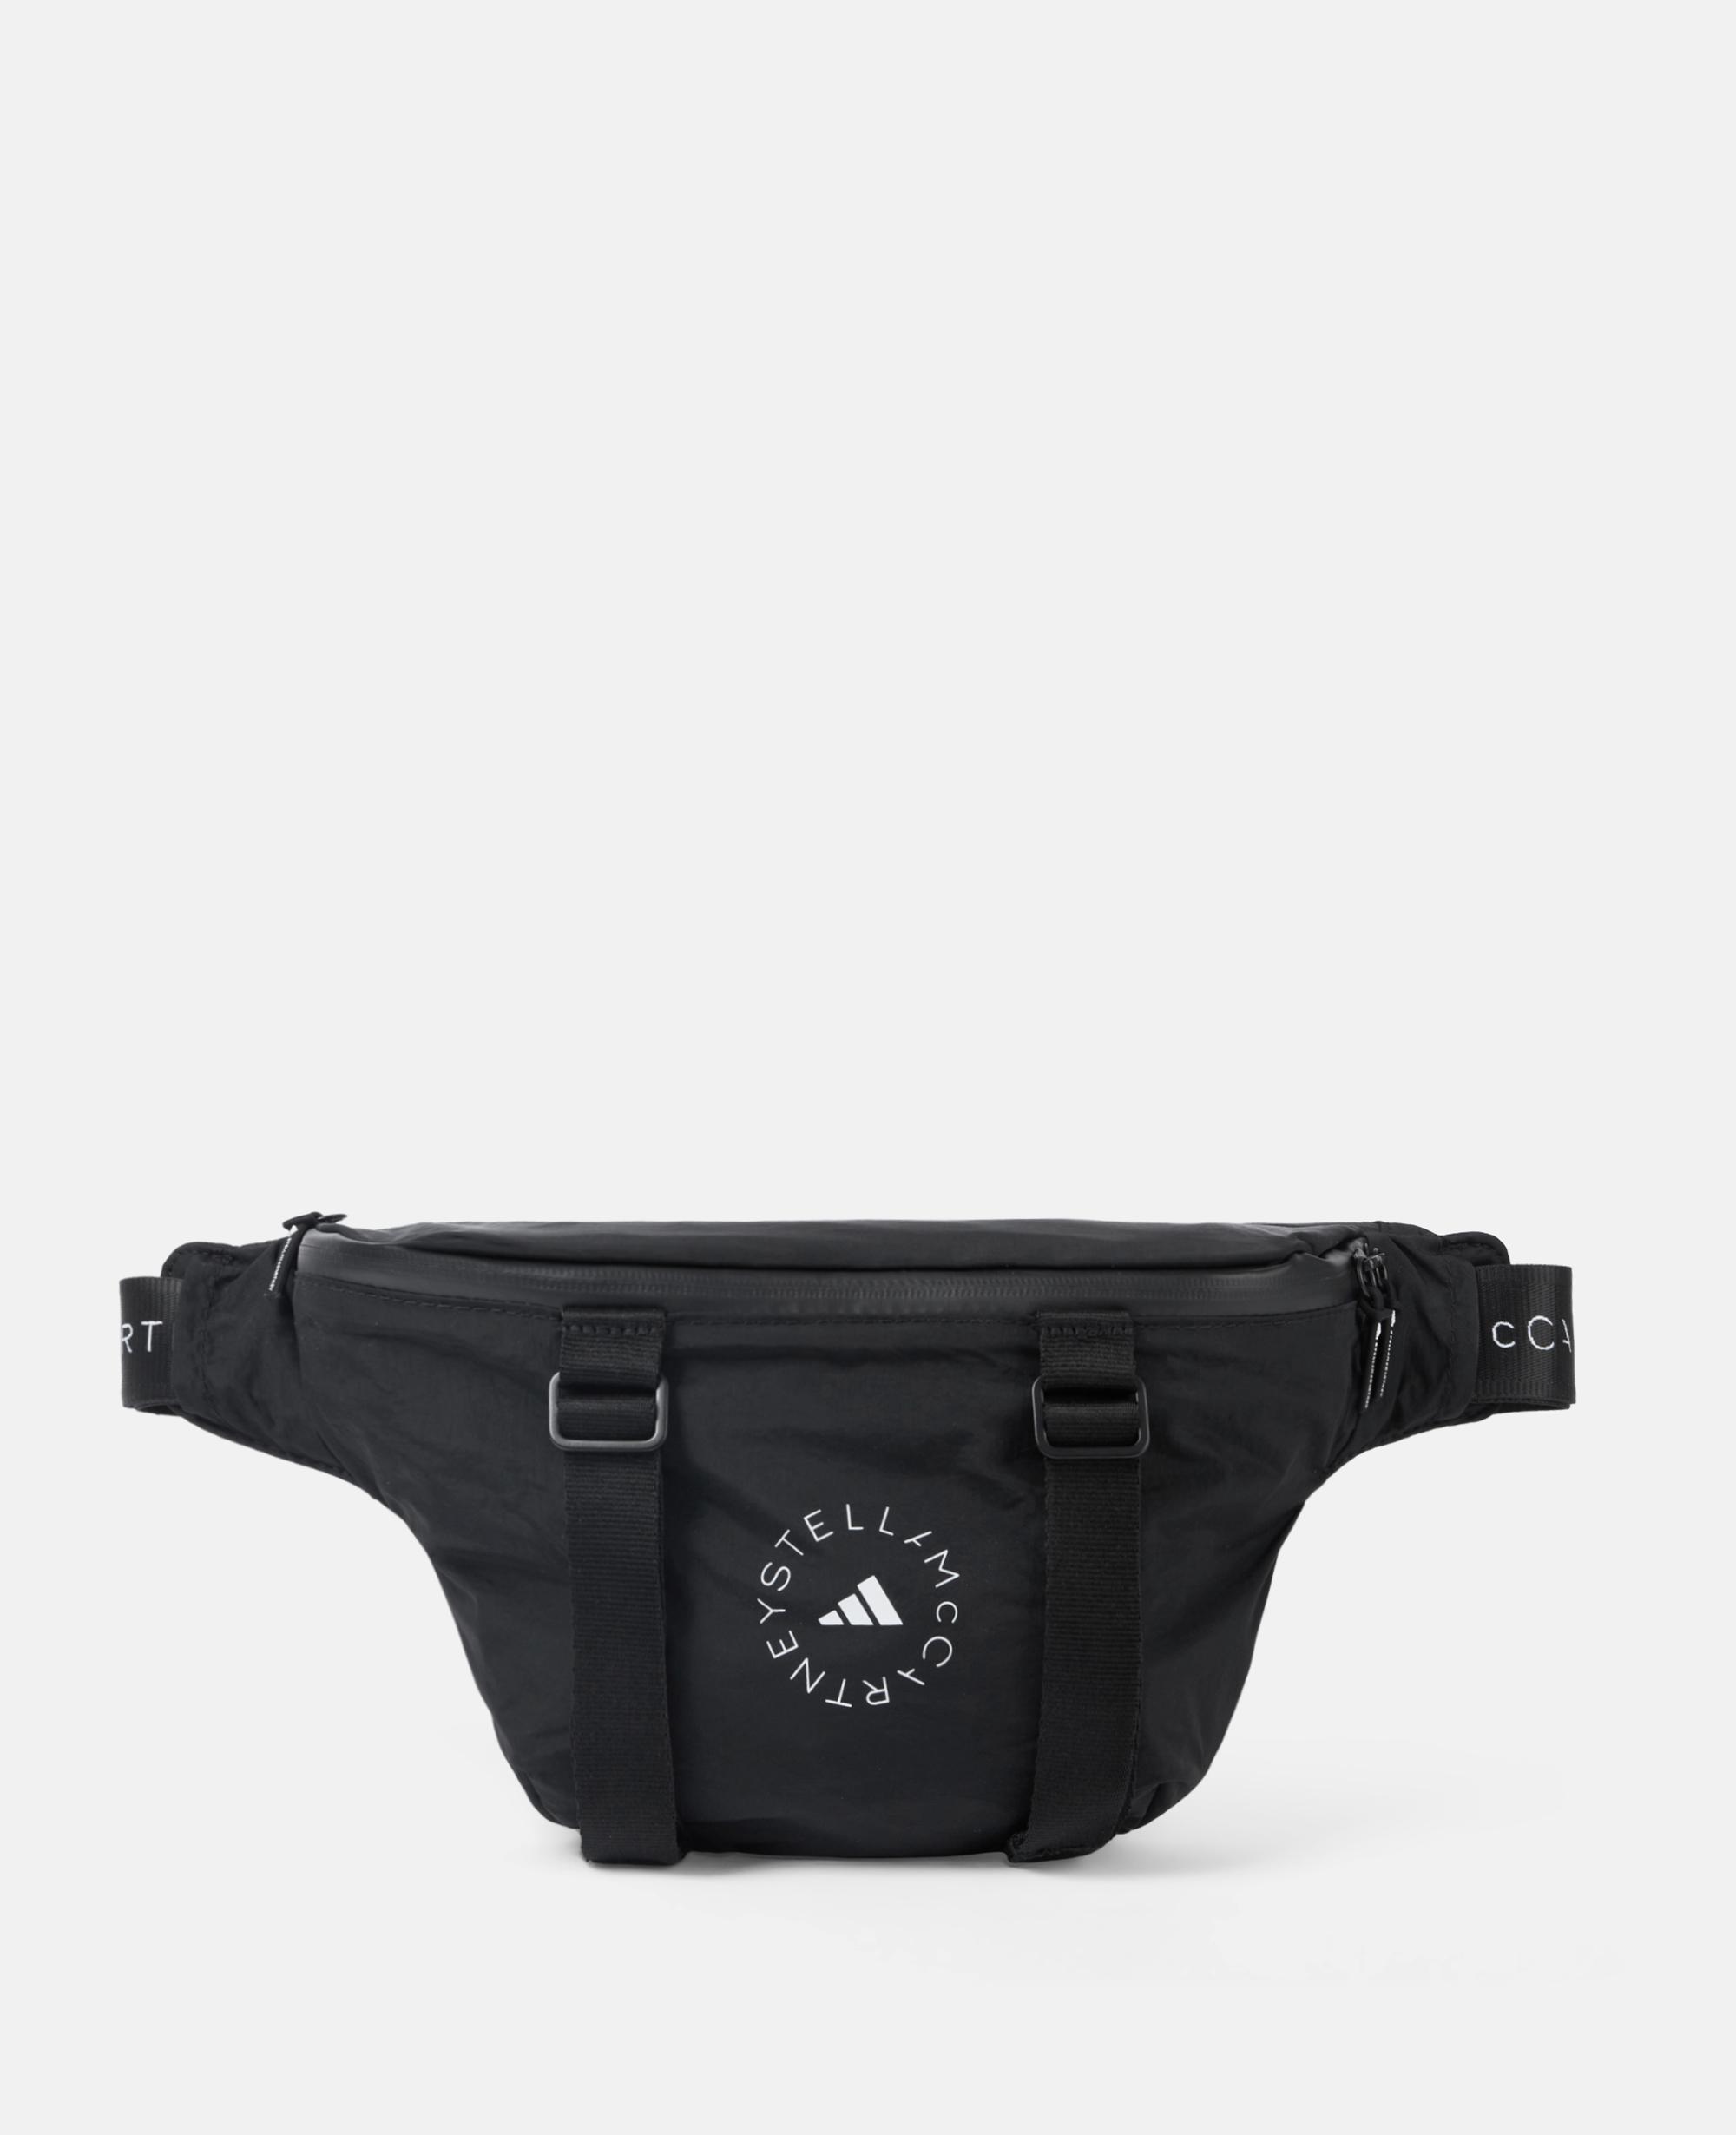 Bum Bag Black Mini Bag Convertible Bag Fanny Pack Comes 